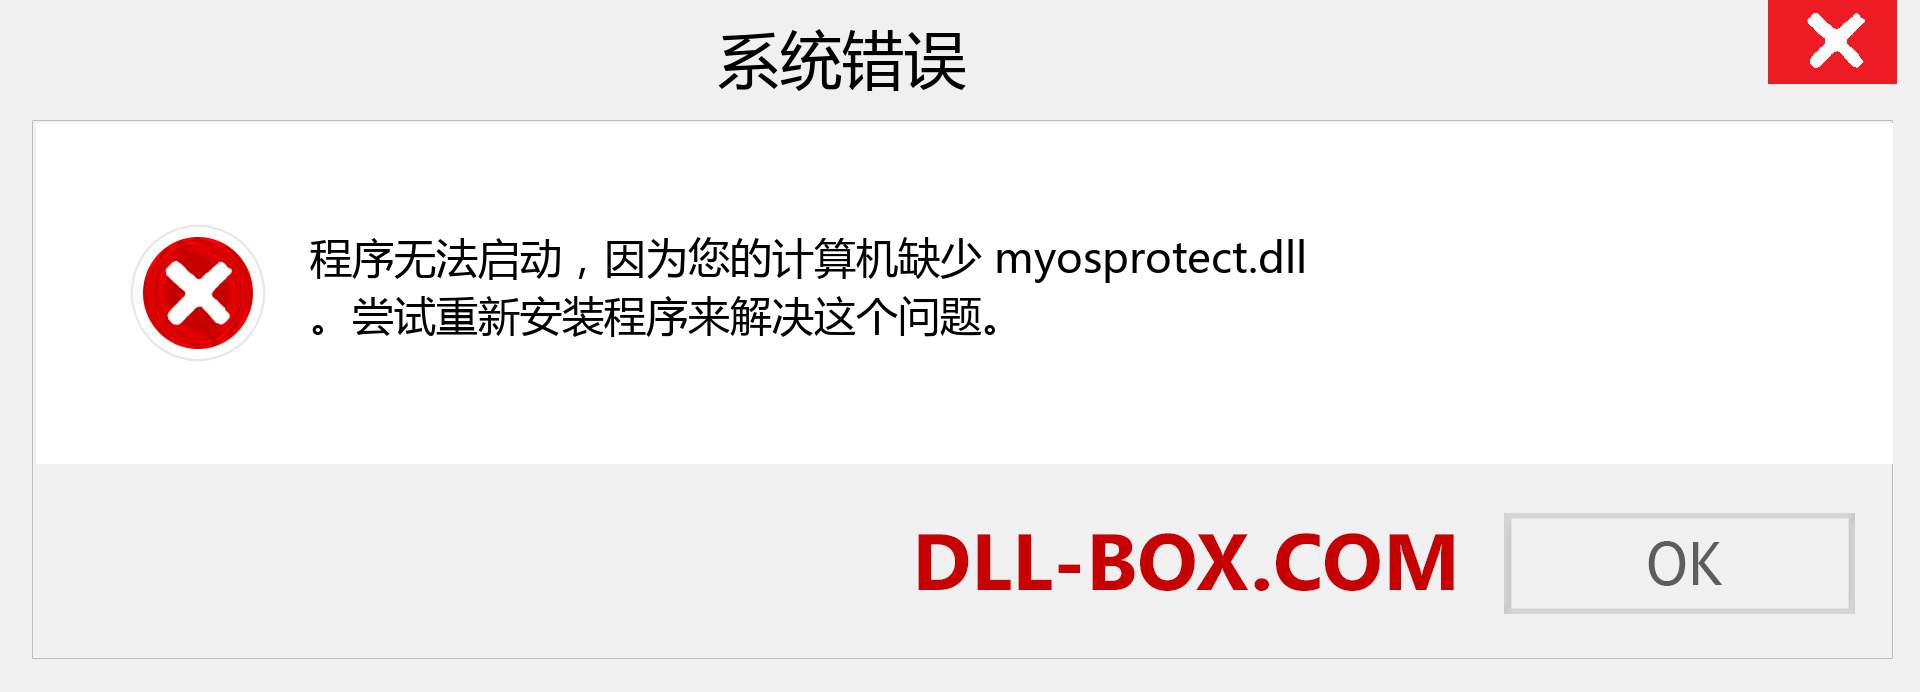 myosprotect.dll 文件丢失？。 适用于 Windows 7、8、10 的下载 - 修复 Windows、照片、图像上的 myosprotect dll 丢失错误